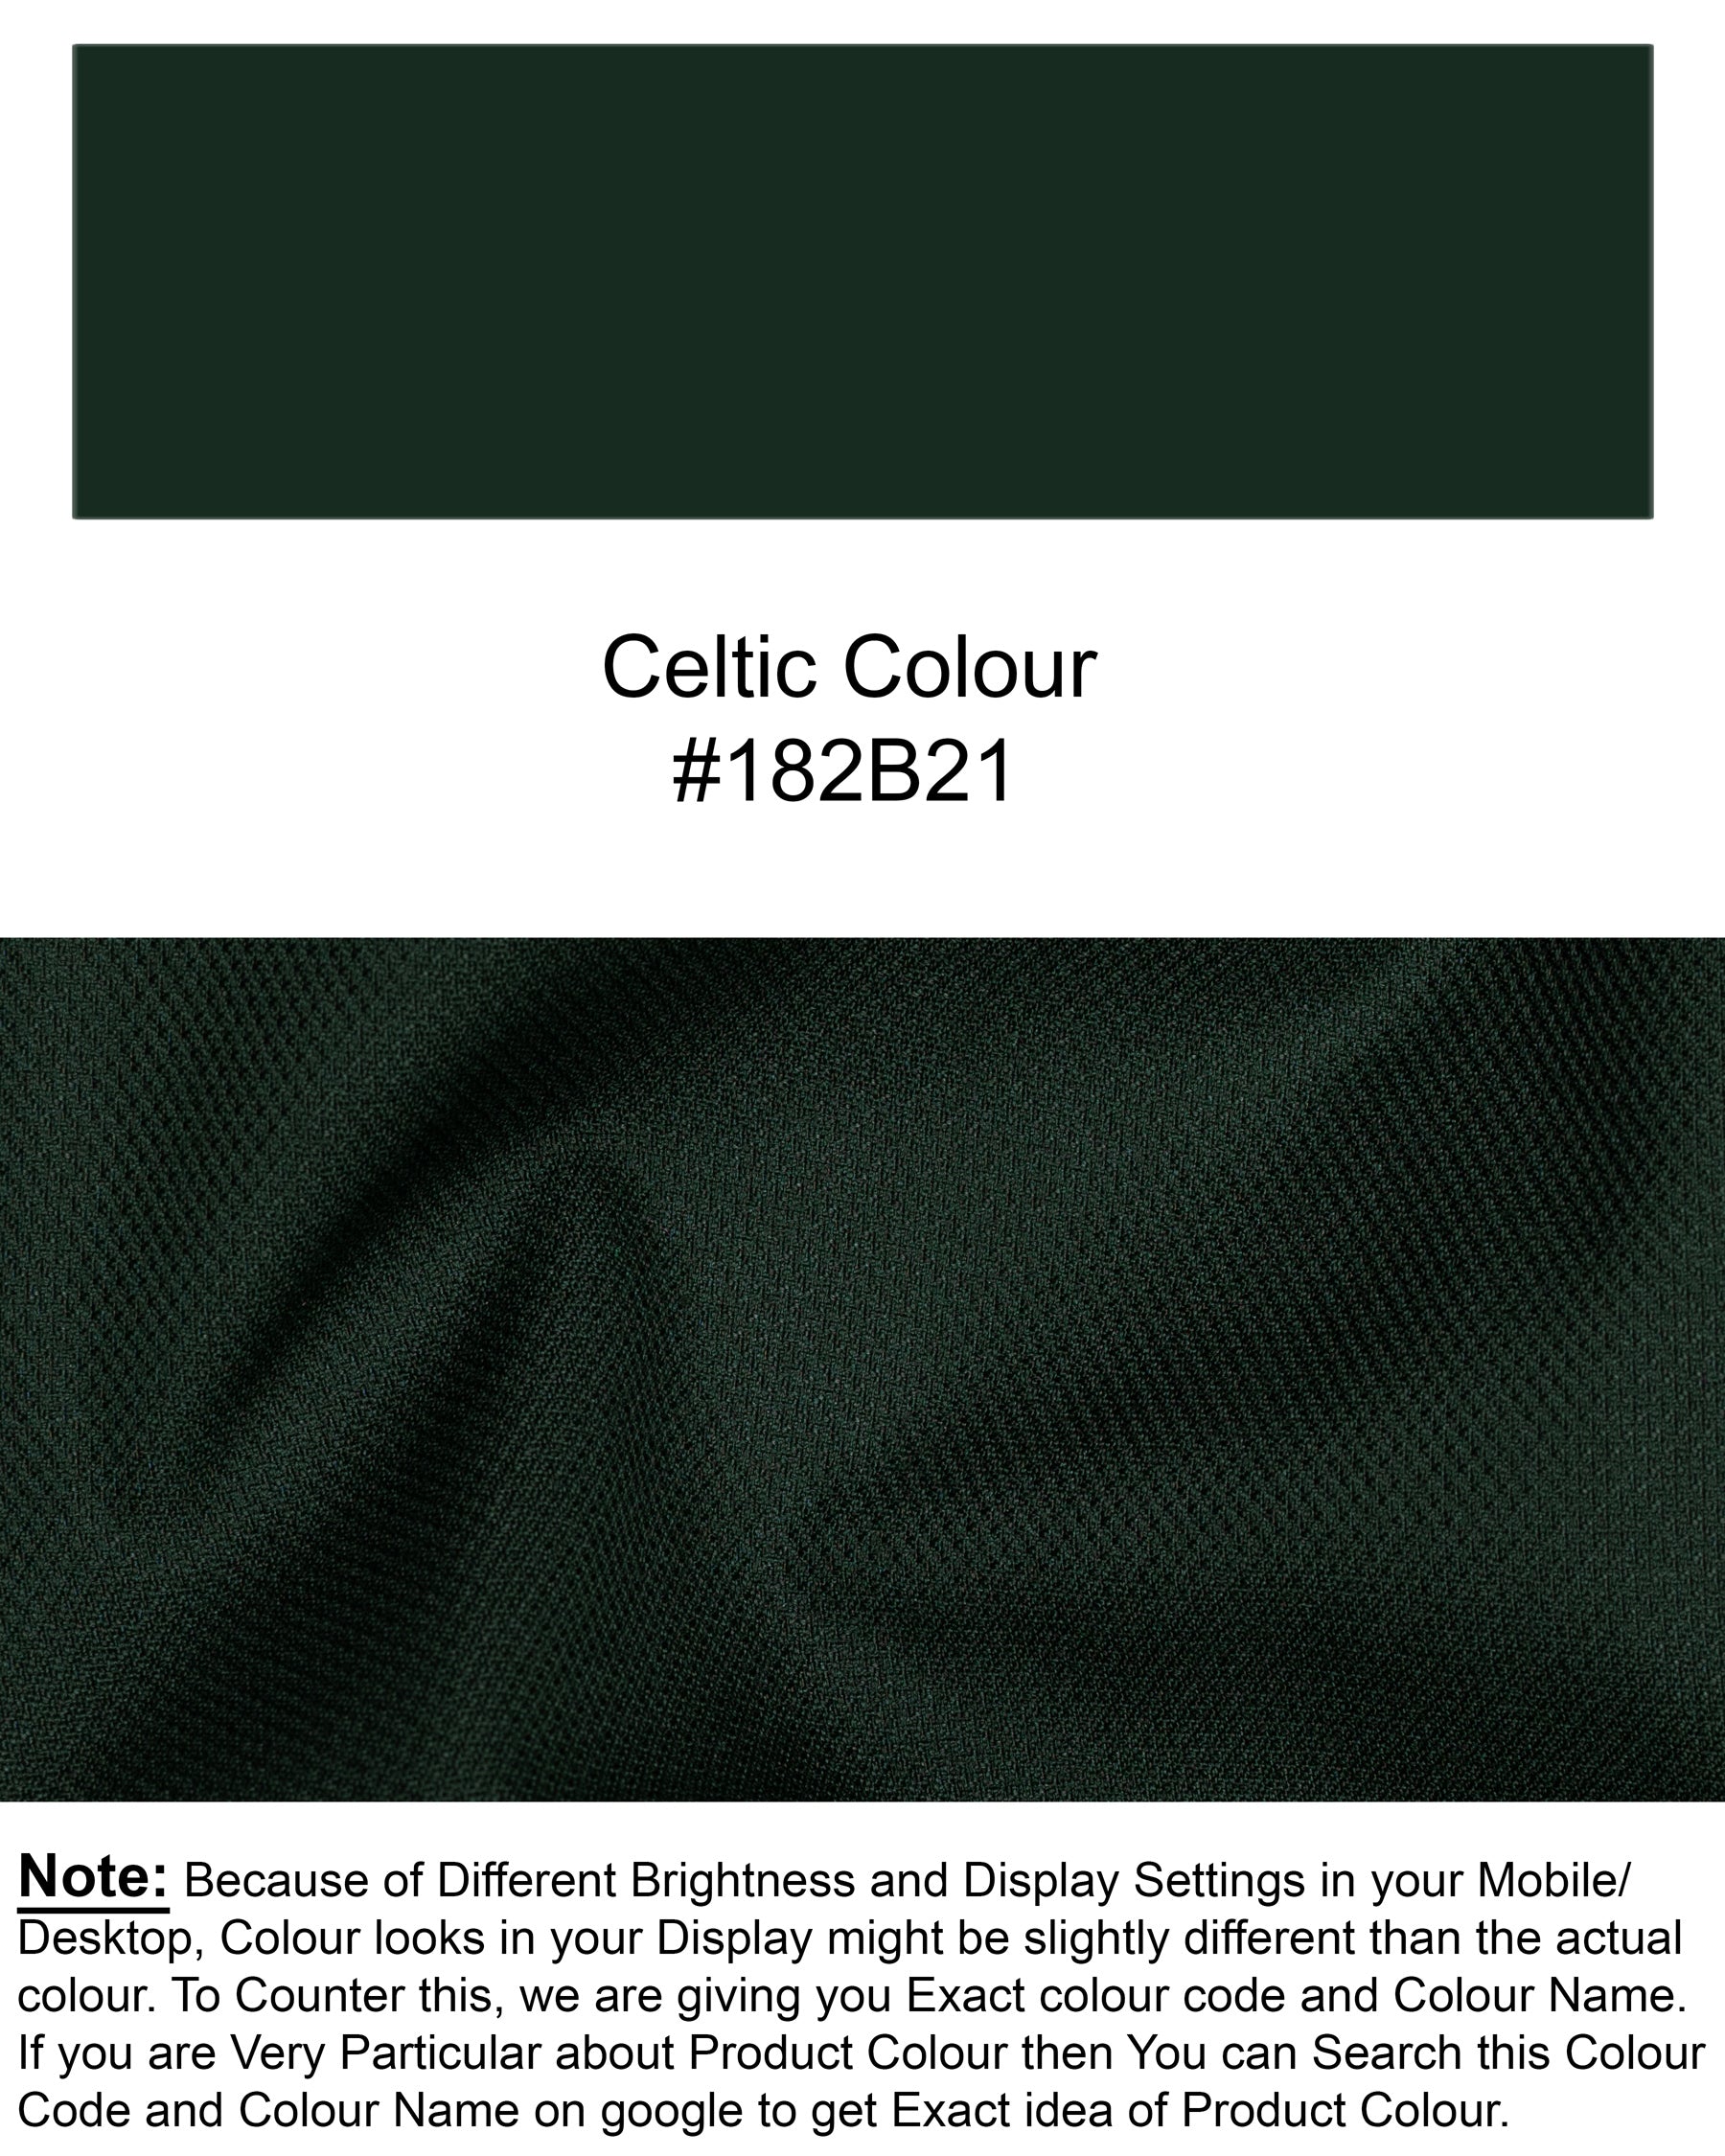 Celtic Green Textured Cross Buttoned Bandhgala Wool Rich Blazer BL1404-CBG-36, BL1404-CBG-38, BL1404-CBG-40, BL1404-CBG-42, BL1404-CBG-44, BL1404-CBG-46, BL1404-CBG-48, BL1404-CBG-50, BL1404-CBG-52, BL1404-CBG-54, BL1404-CBG-56, BL1404-CBG-58, BL1404-CBG-60